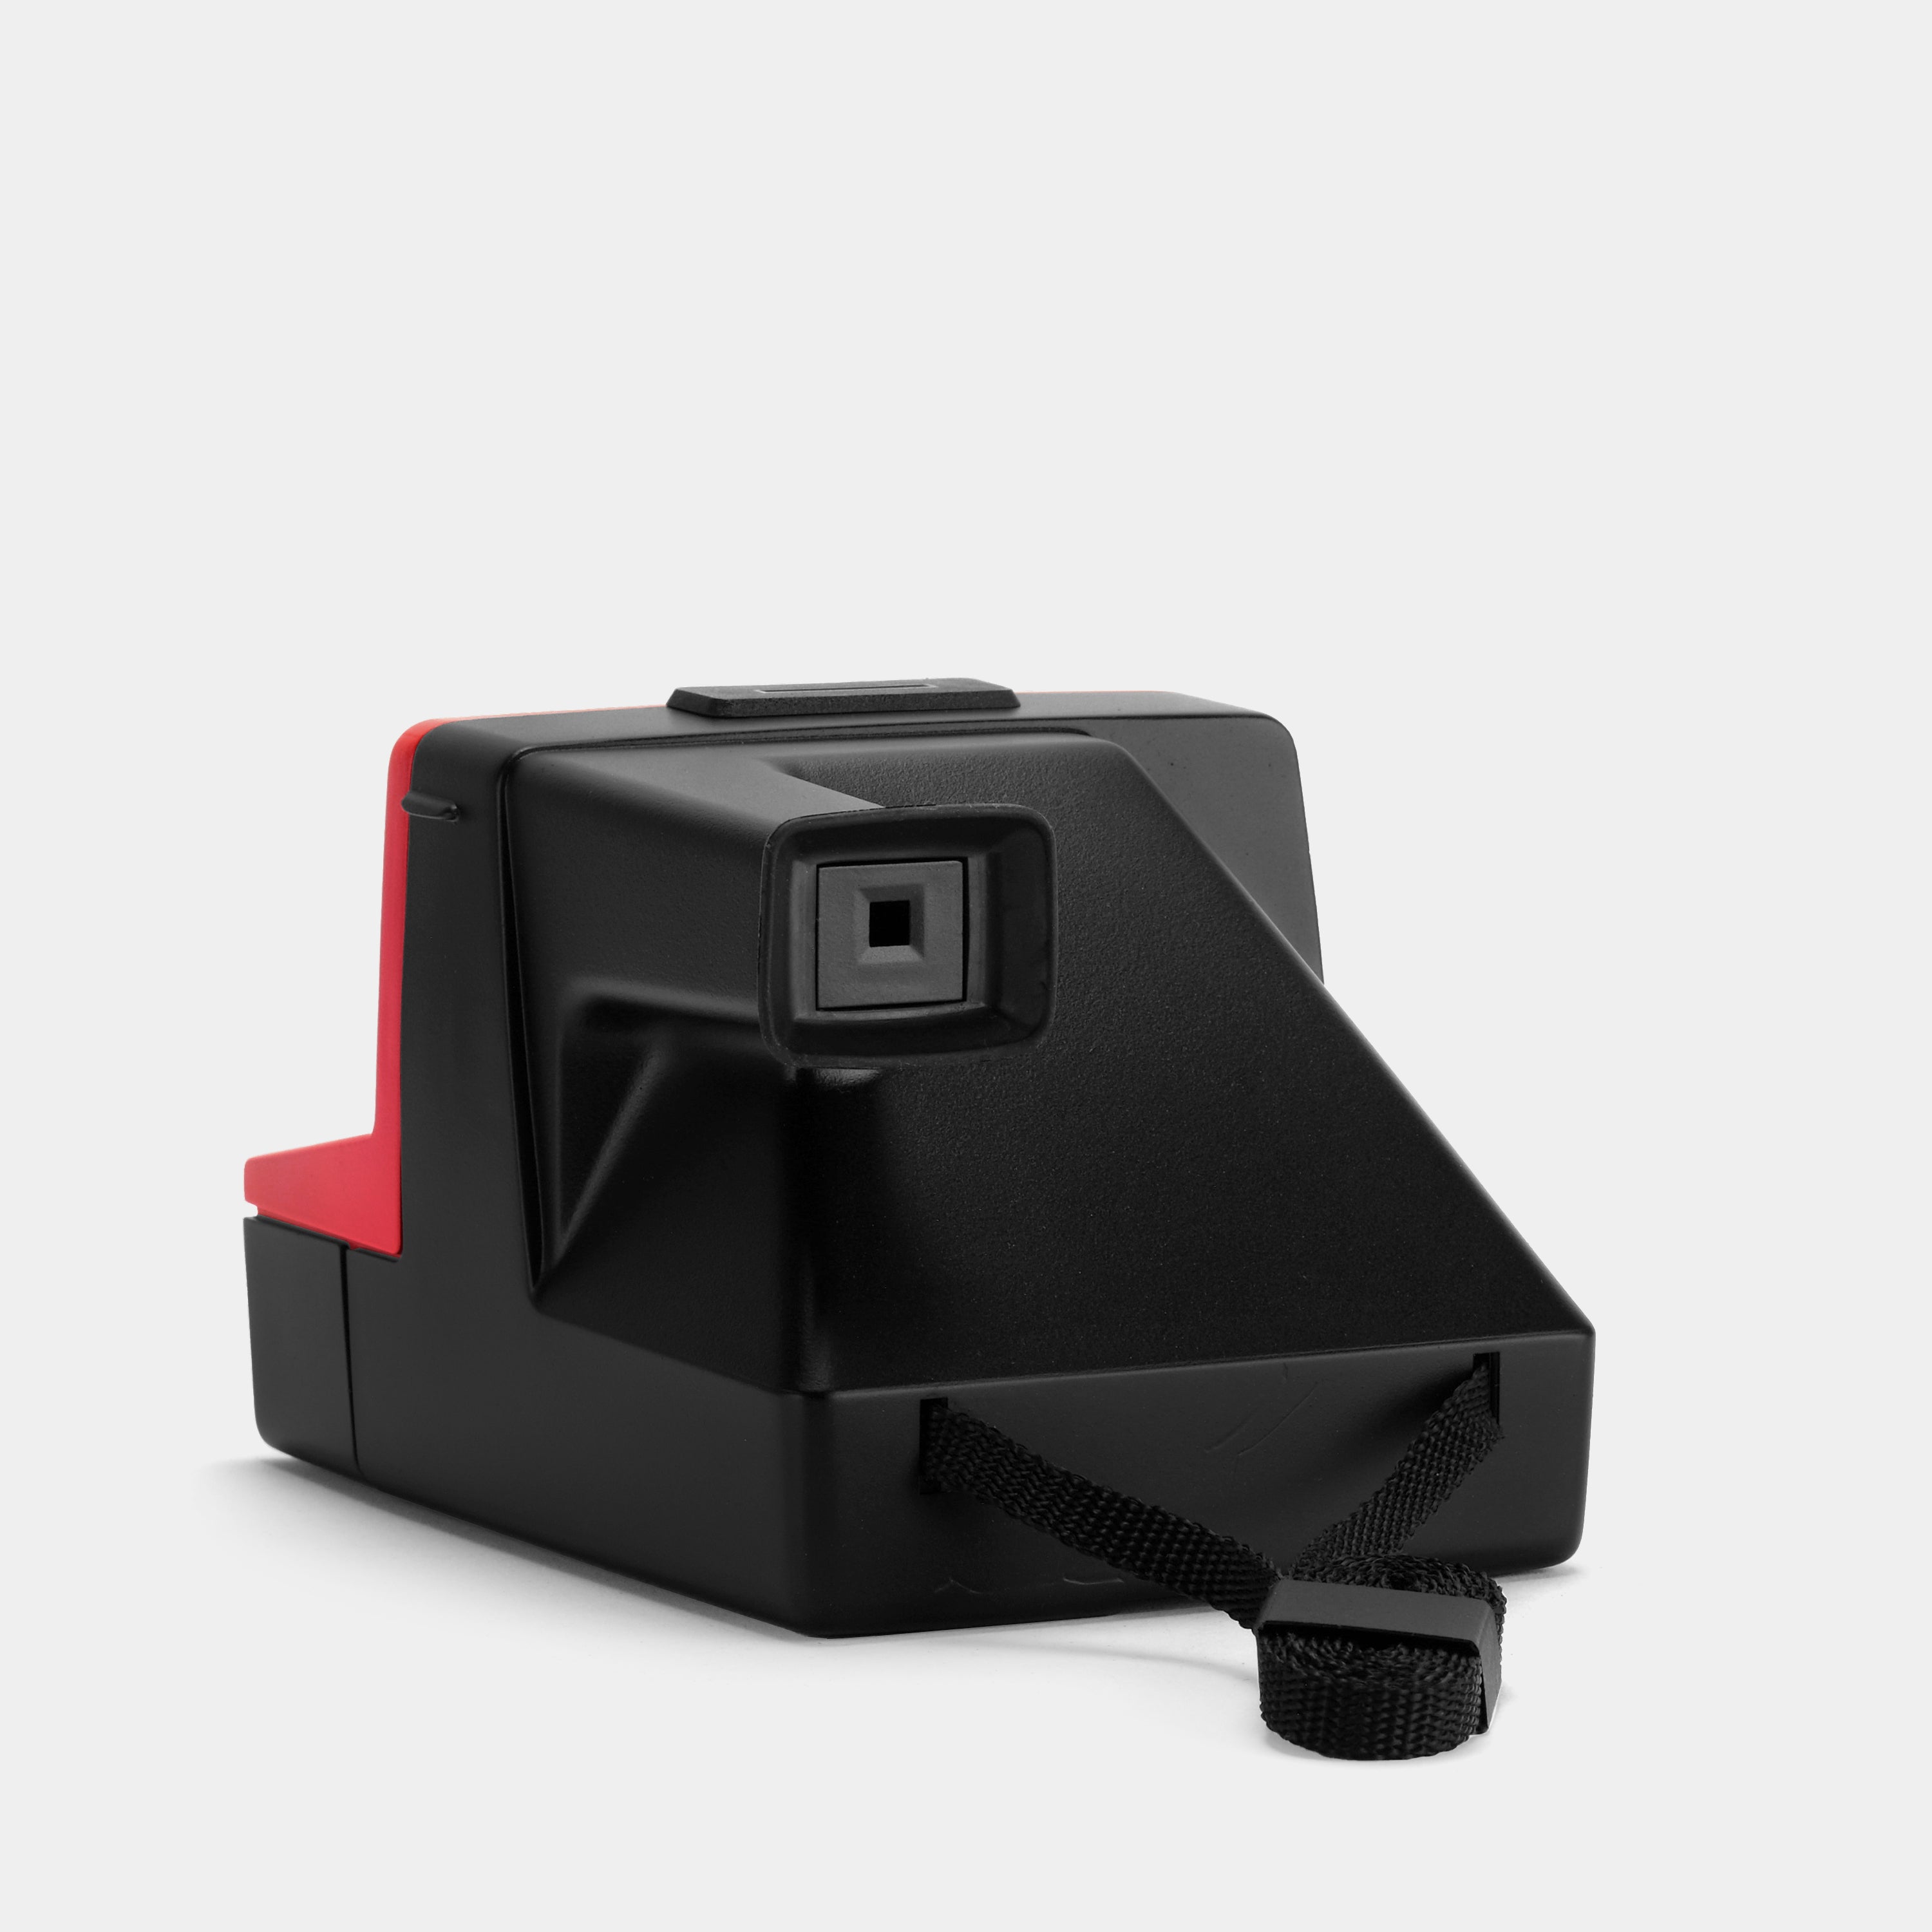 Polaroid SX-70 Red Instant Film Camera